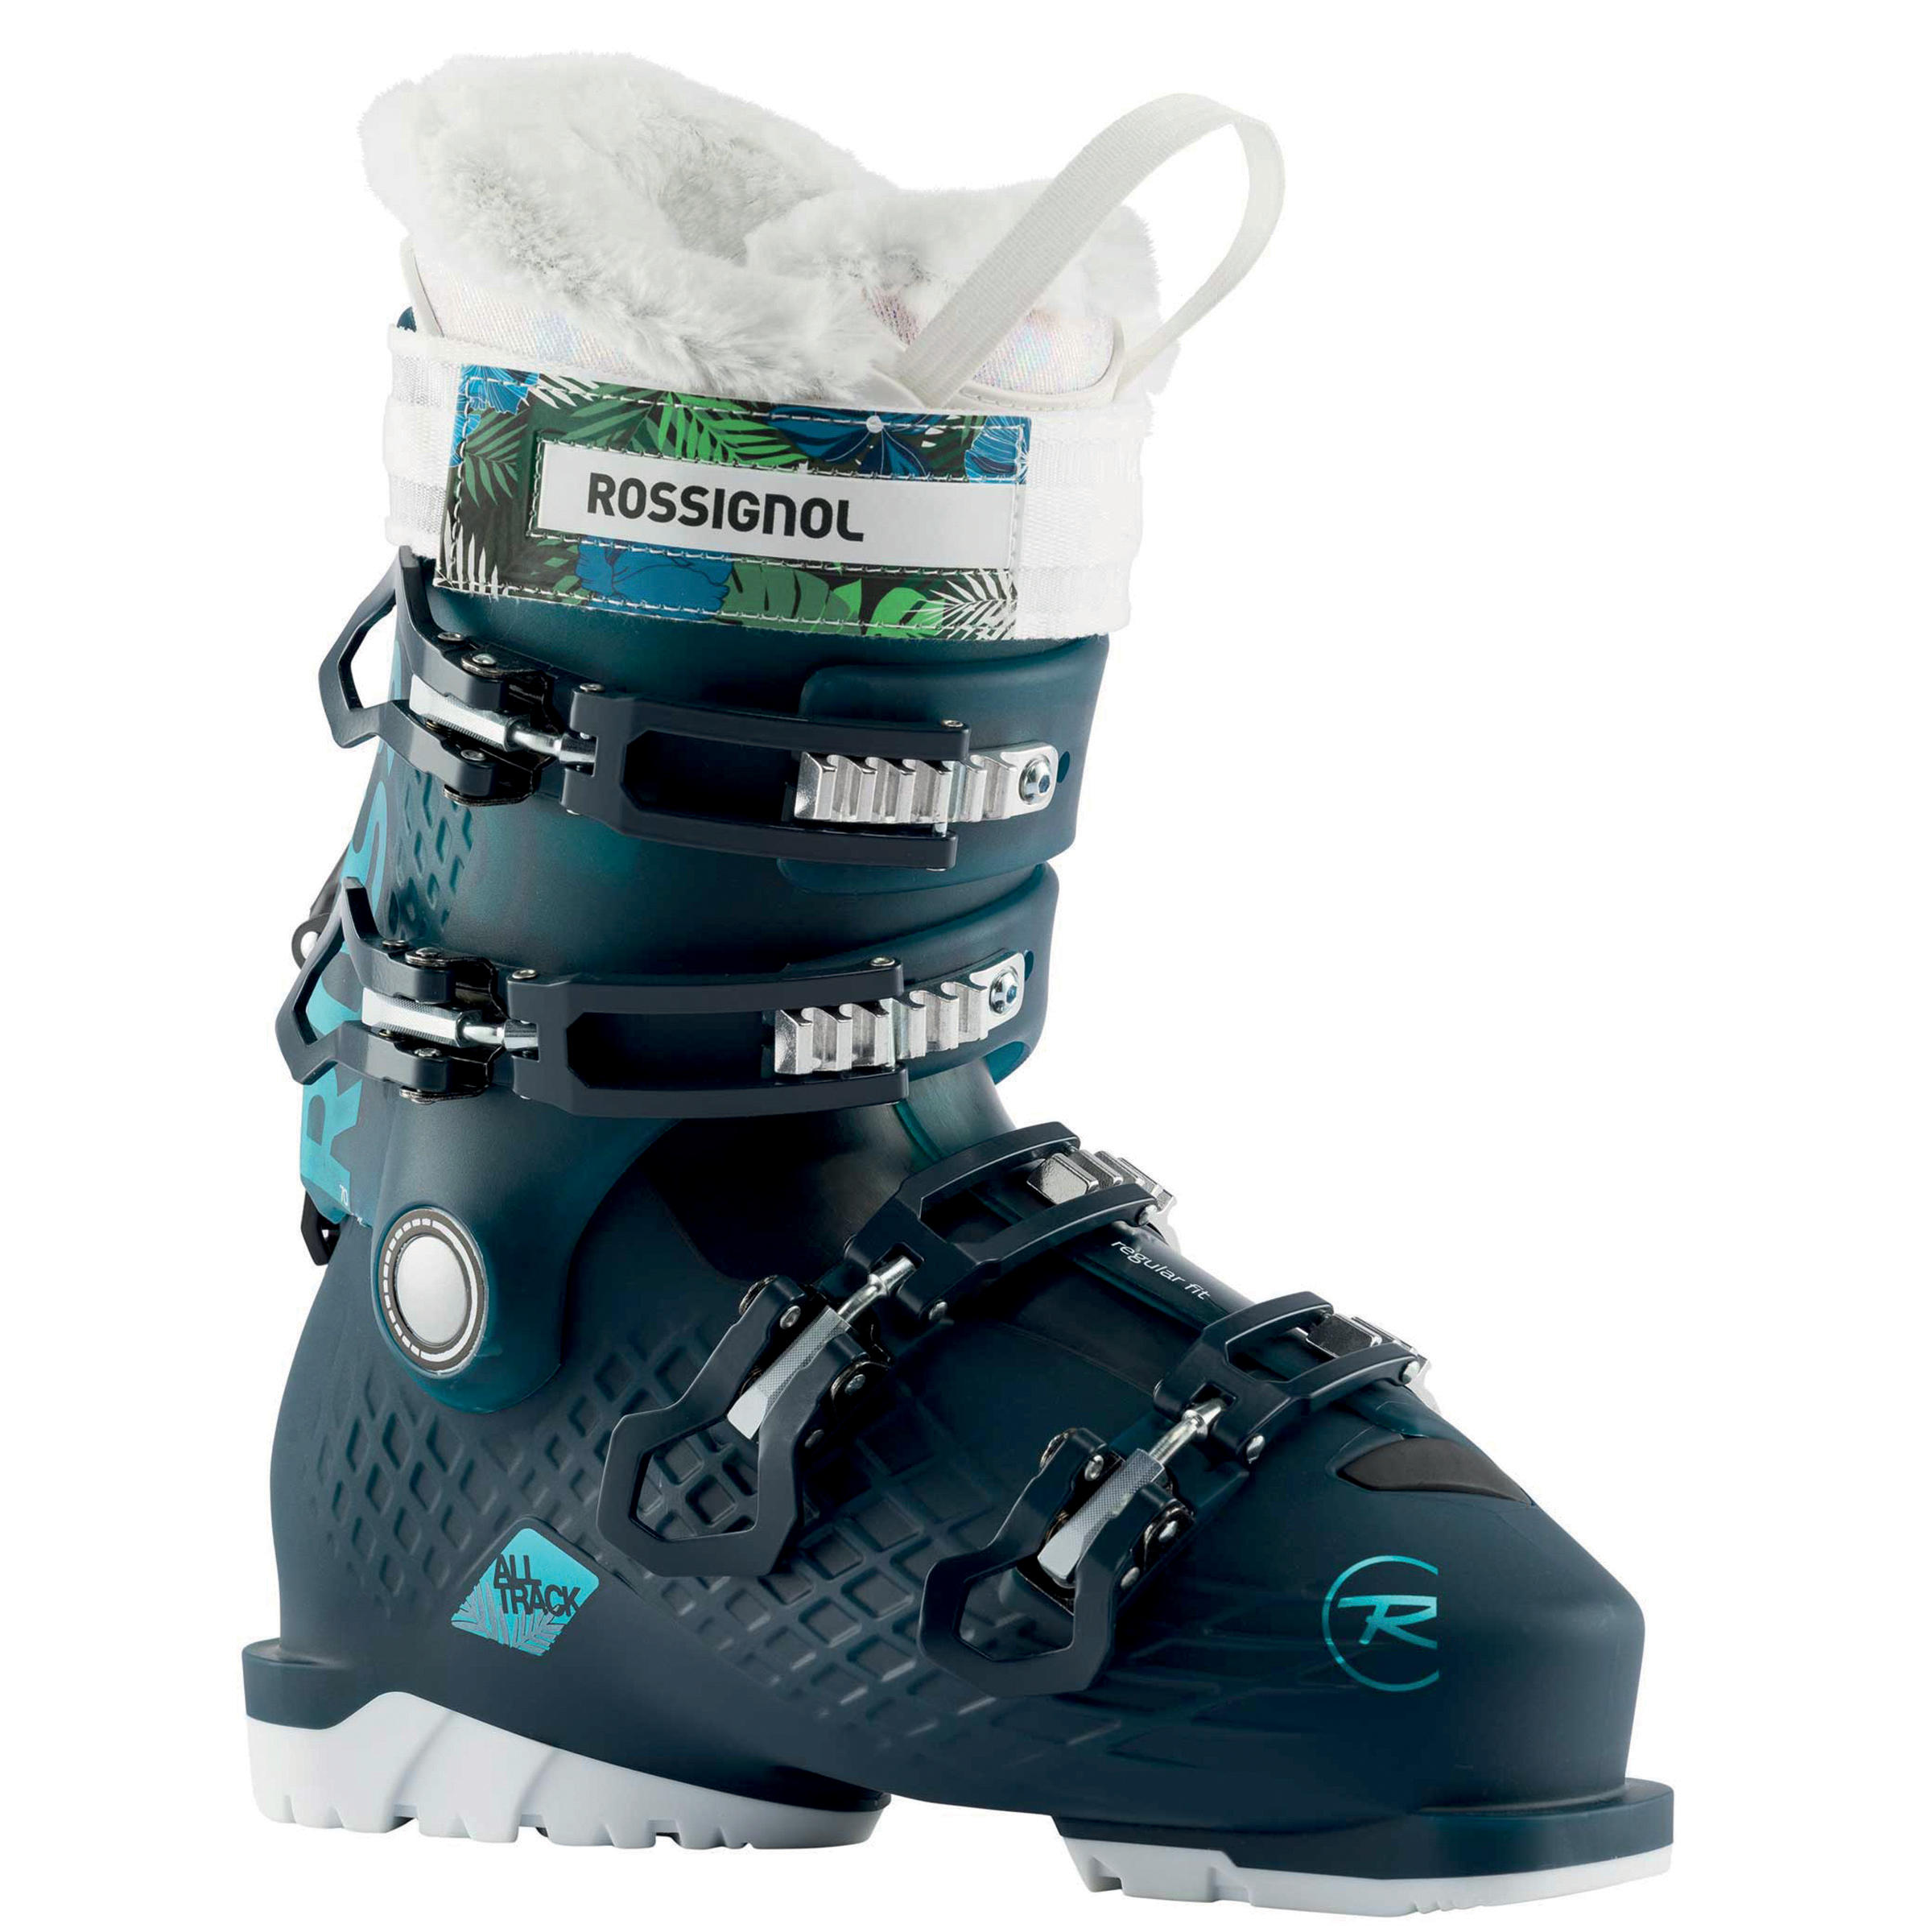 ROSSIGNOL Women's Downhill Ski Boots